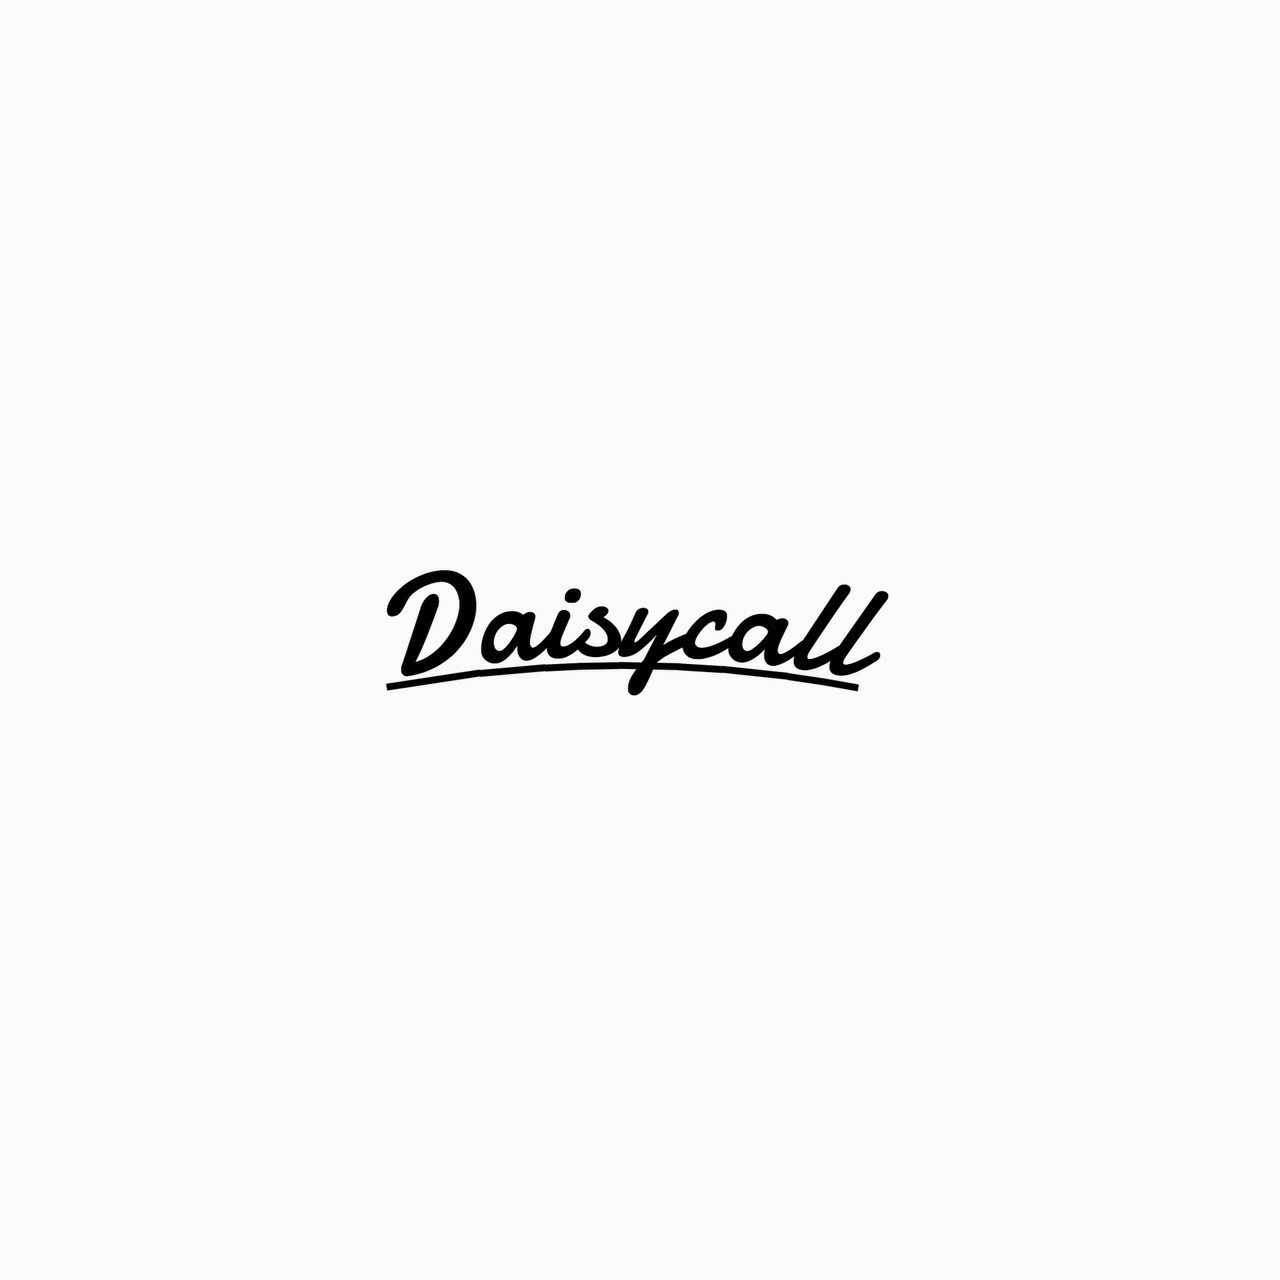 Daisycall